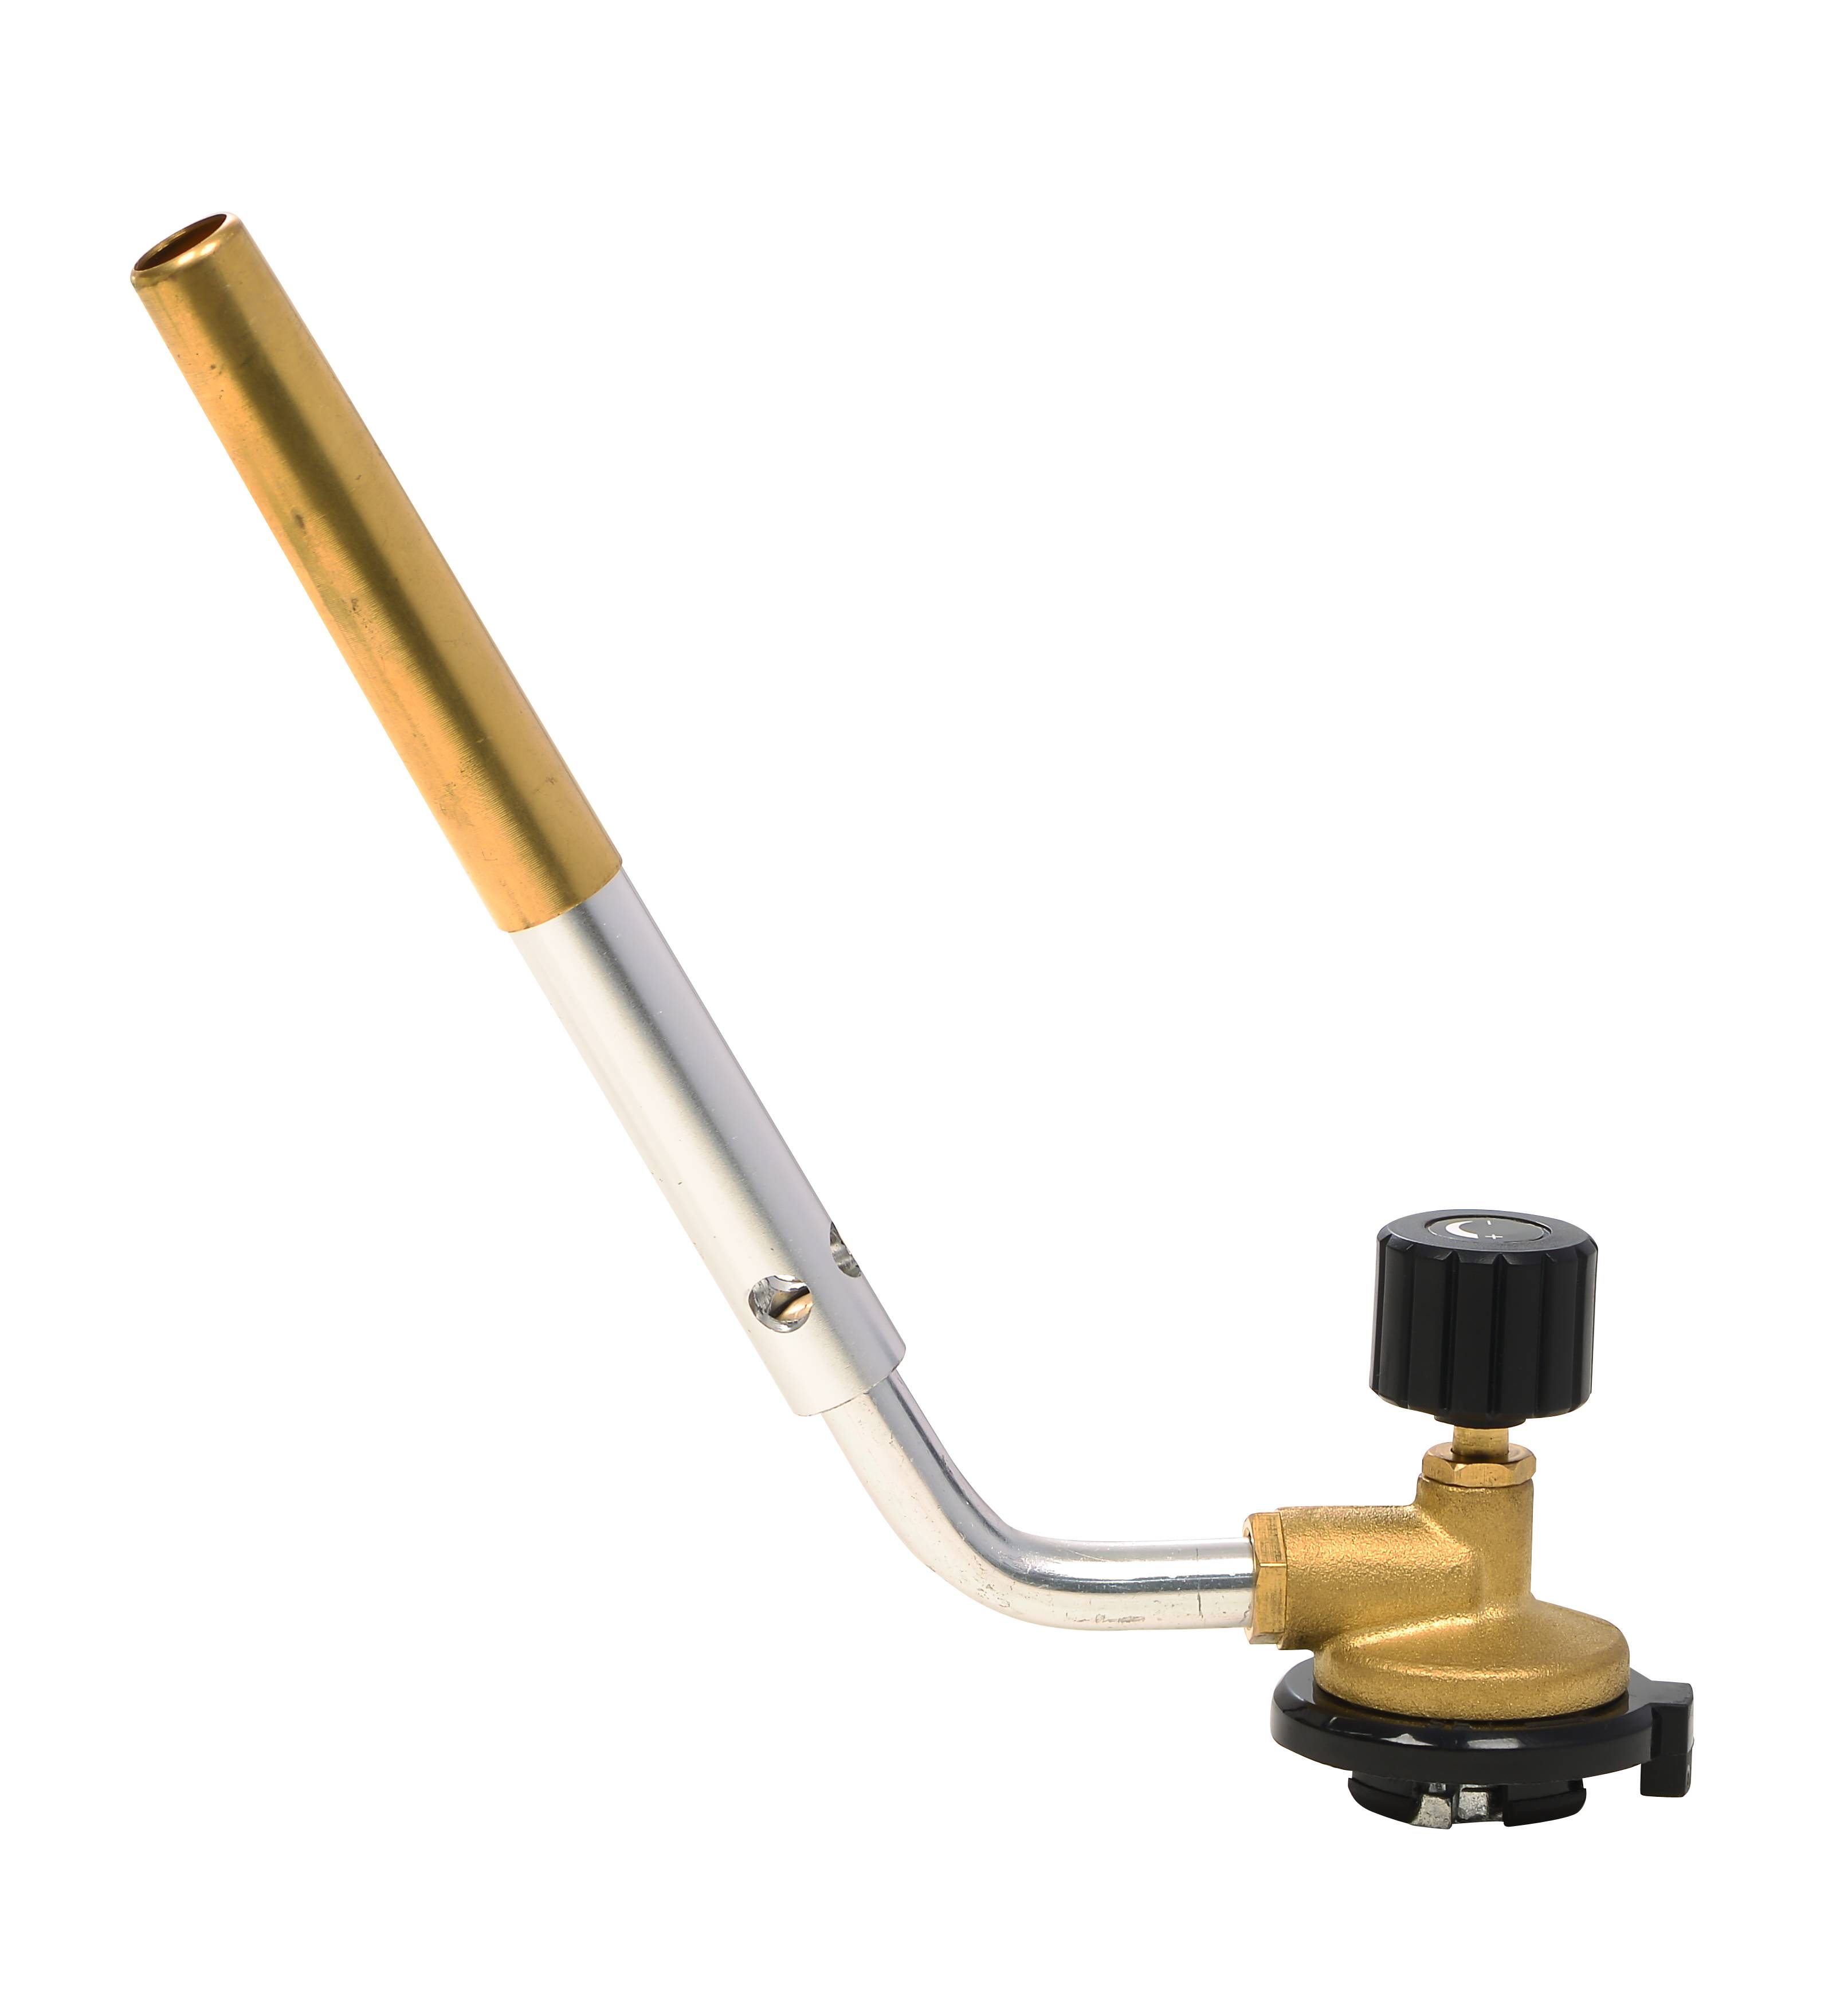 Torch Fire - 360 degree free rotation  brass tube Brazing set torch KLL-7018D – Kalilong